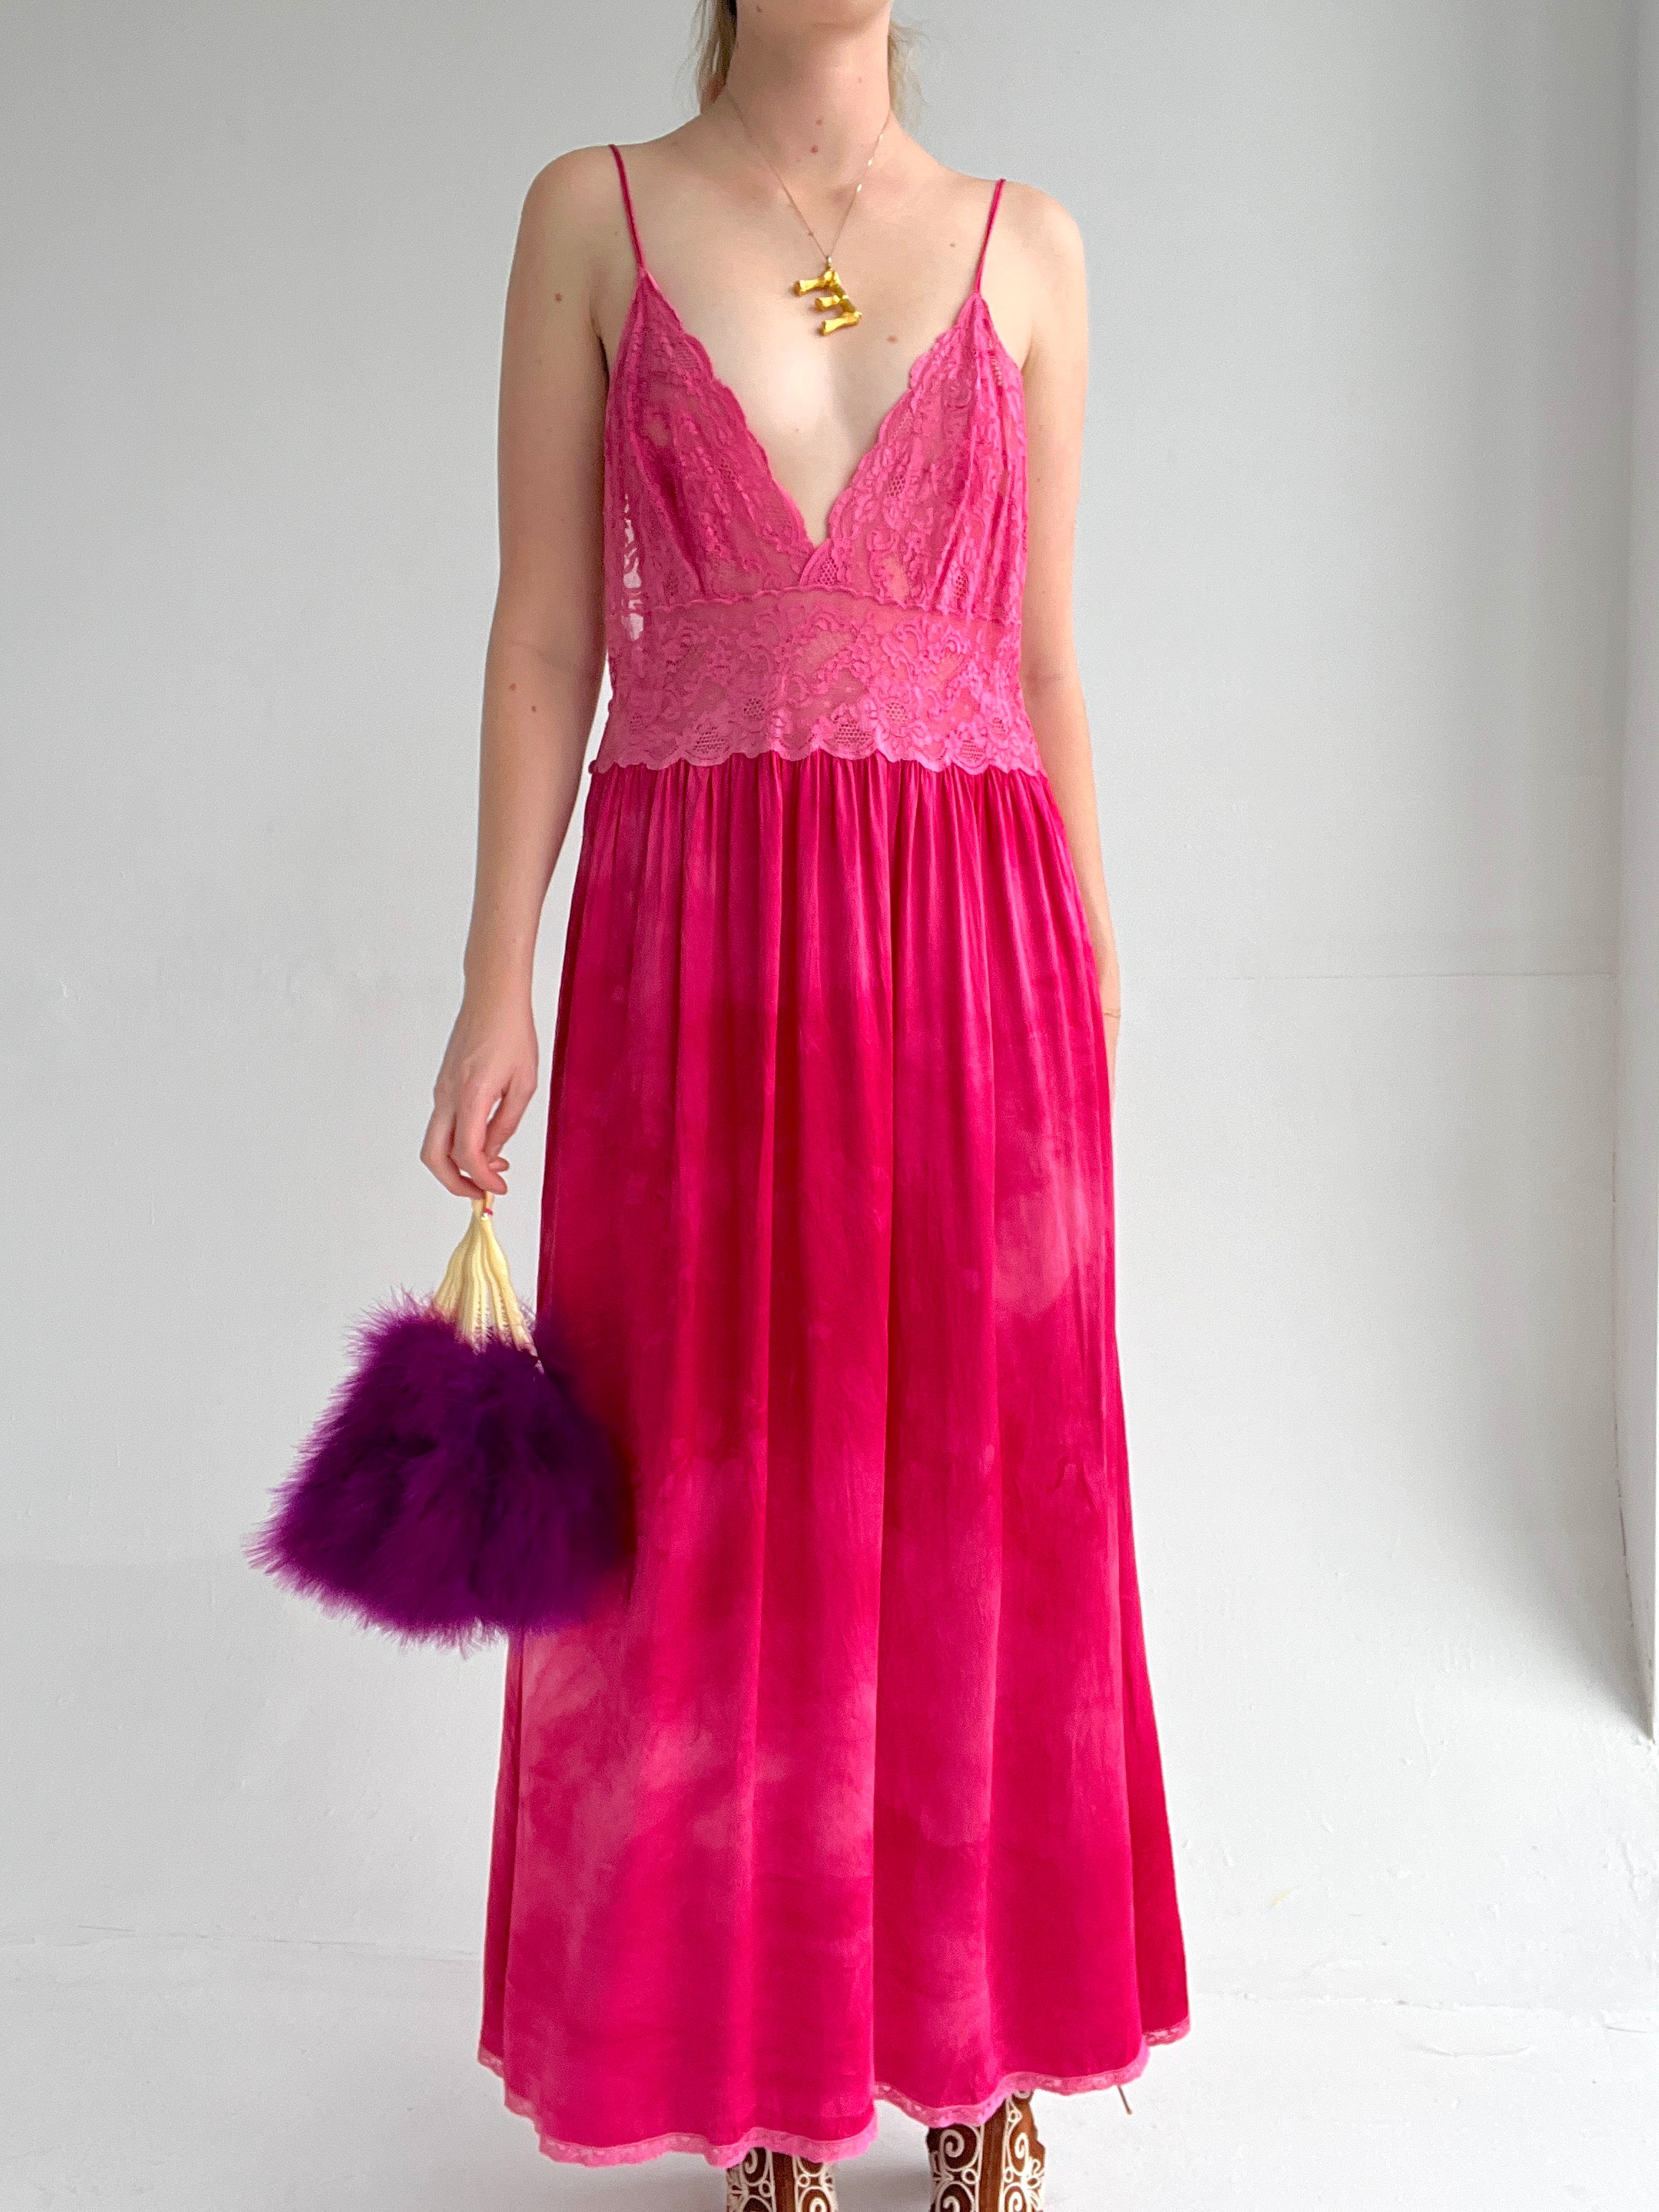 Hand Dyed Bright Pink Silk Spaghetti Strap Slip Dress